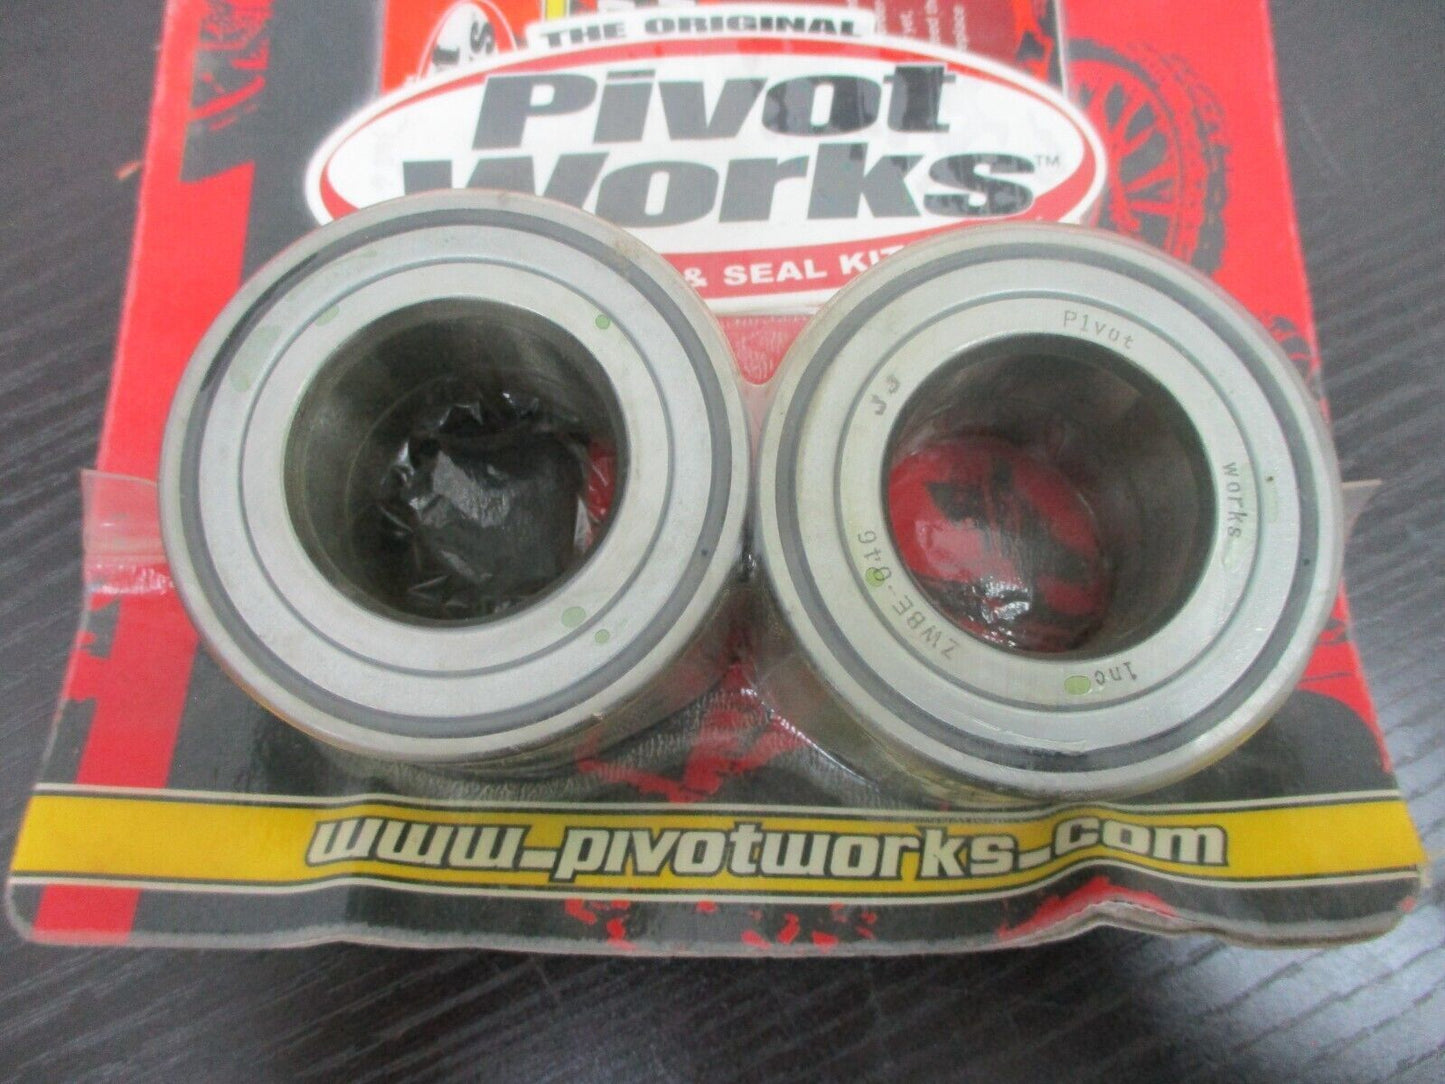 Pivot Works – Multi Rear Wheel Bearing Kits  PWRWK Y27-600